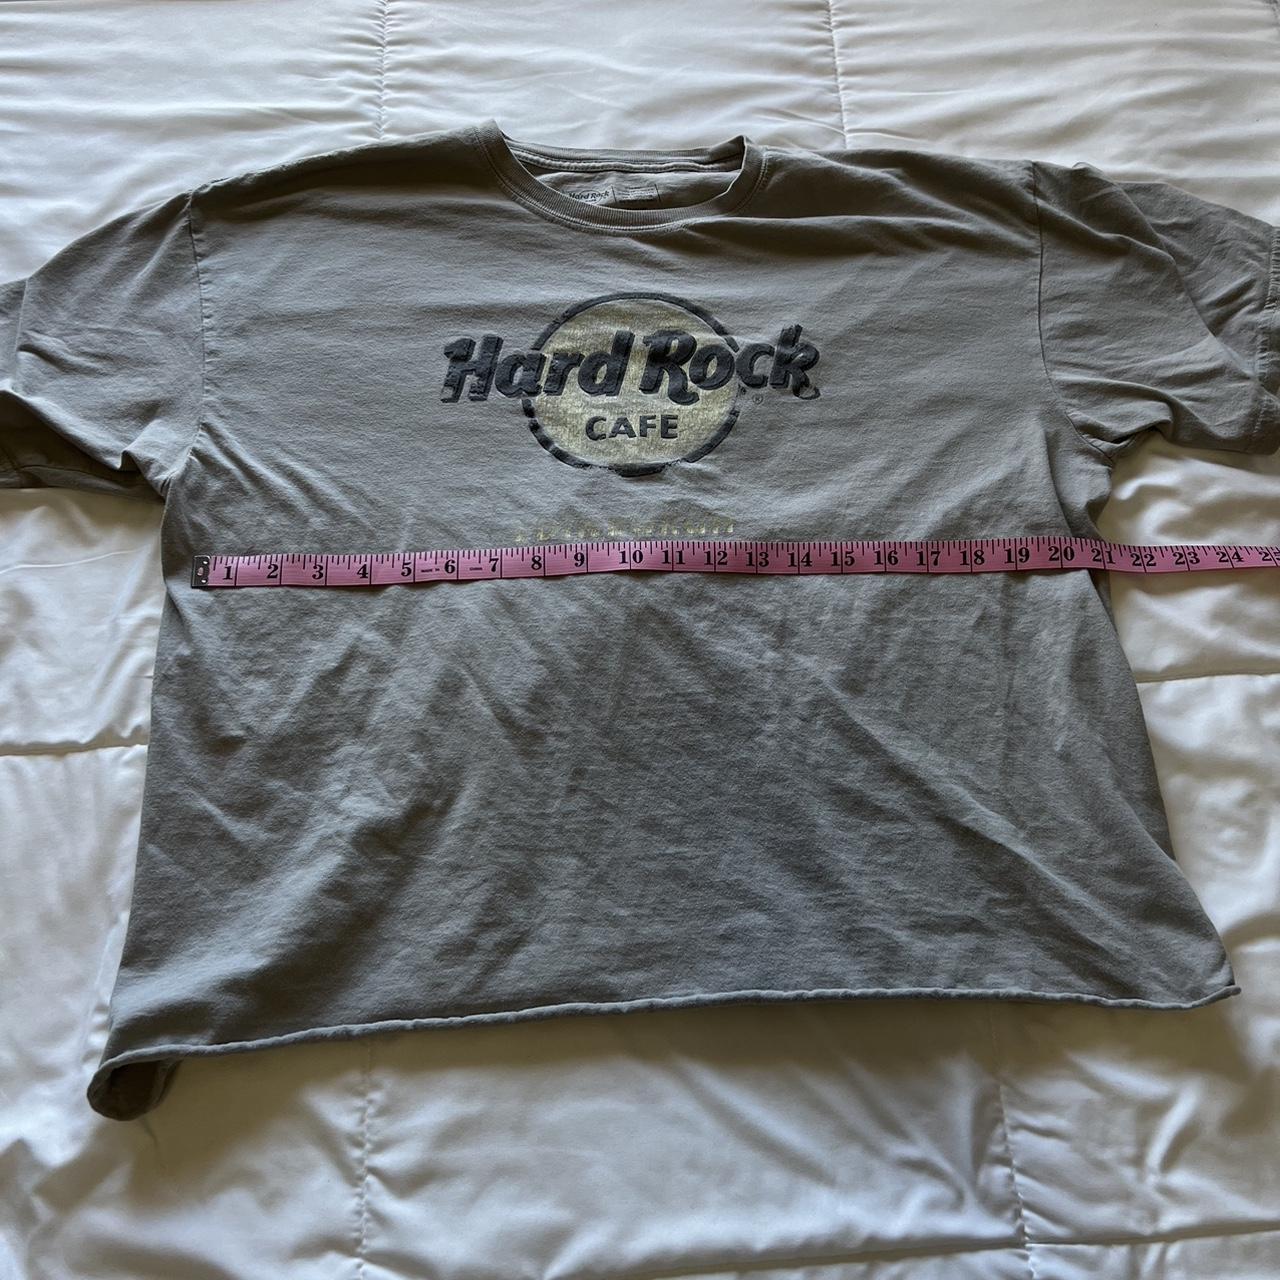 Hard Rock Cafe Women's Grey and Cream T-shirt